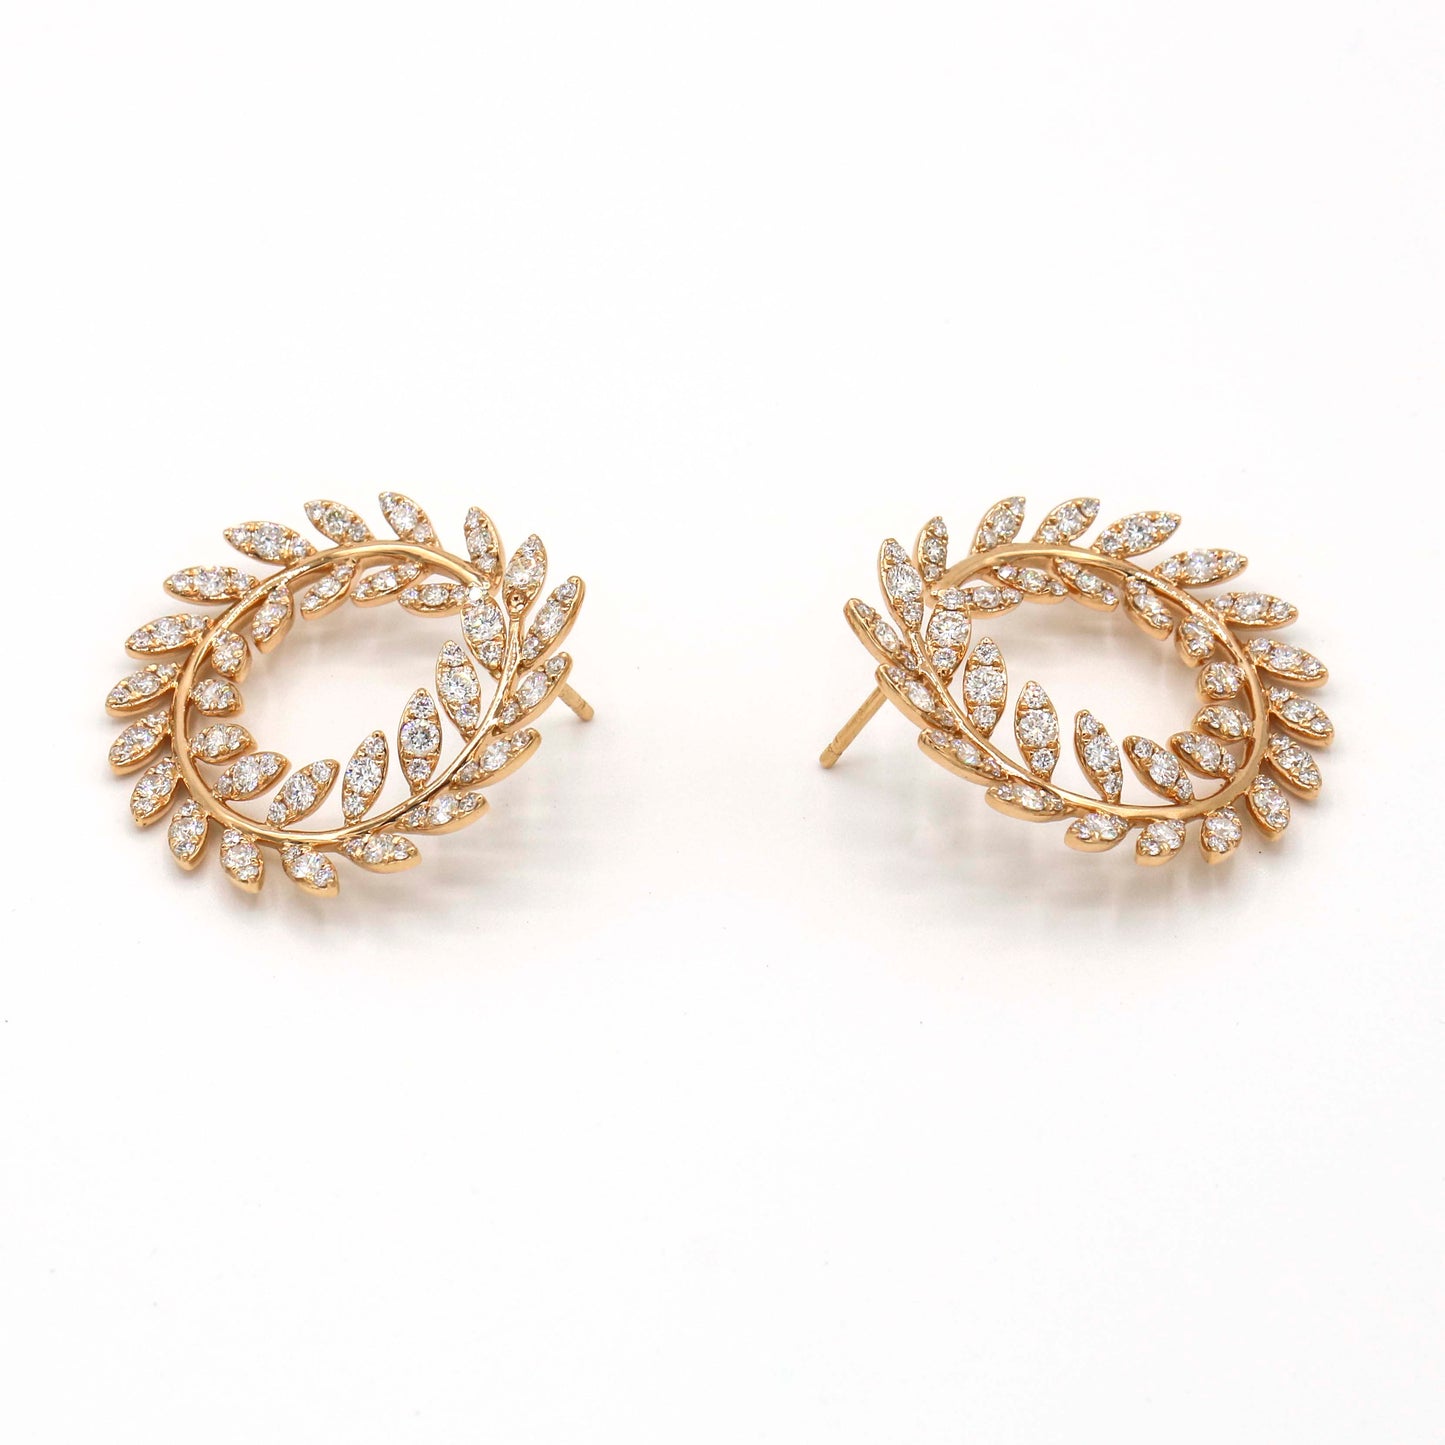 Designer Signed Laurel Wreath Diamond Leaf Earrings in 18k Rose Gold